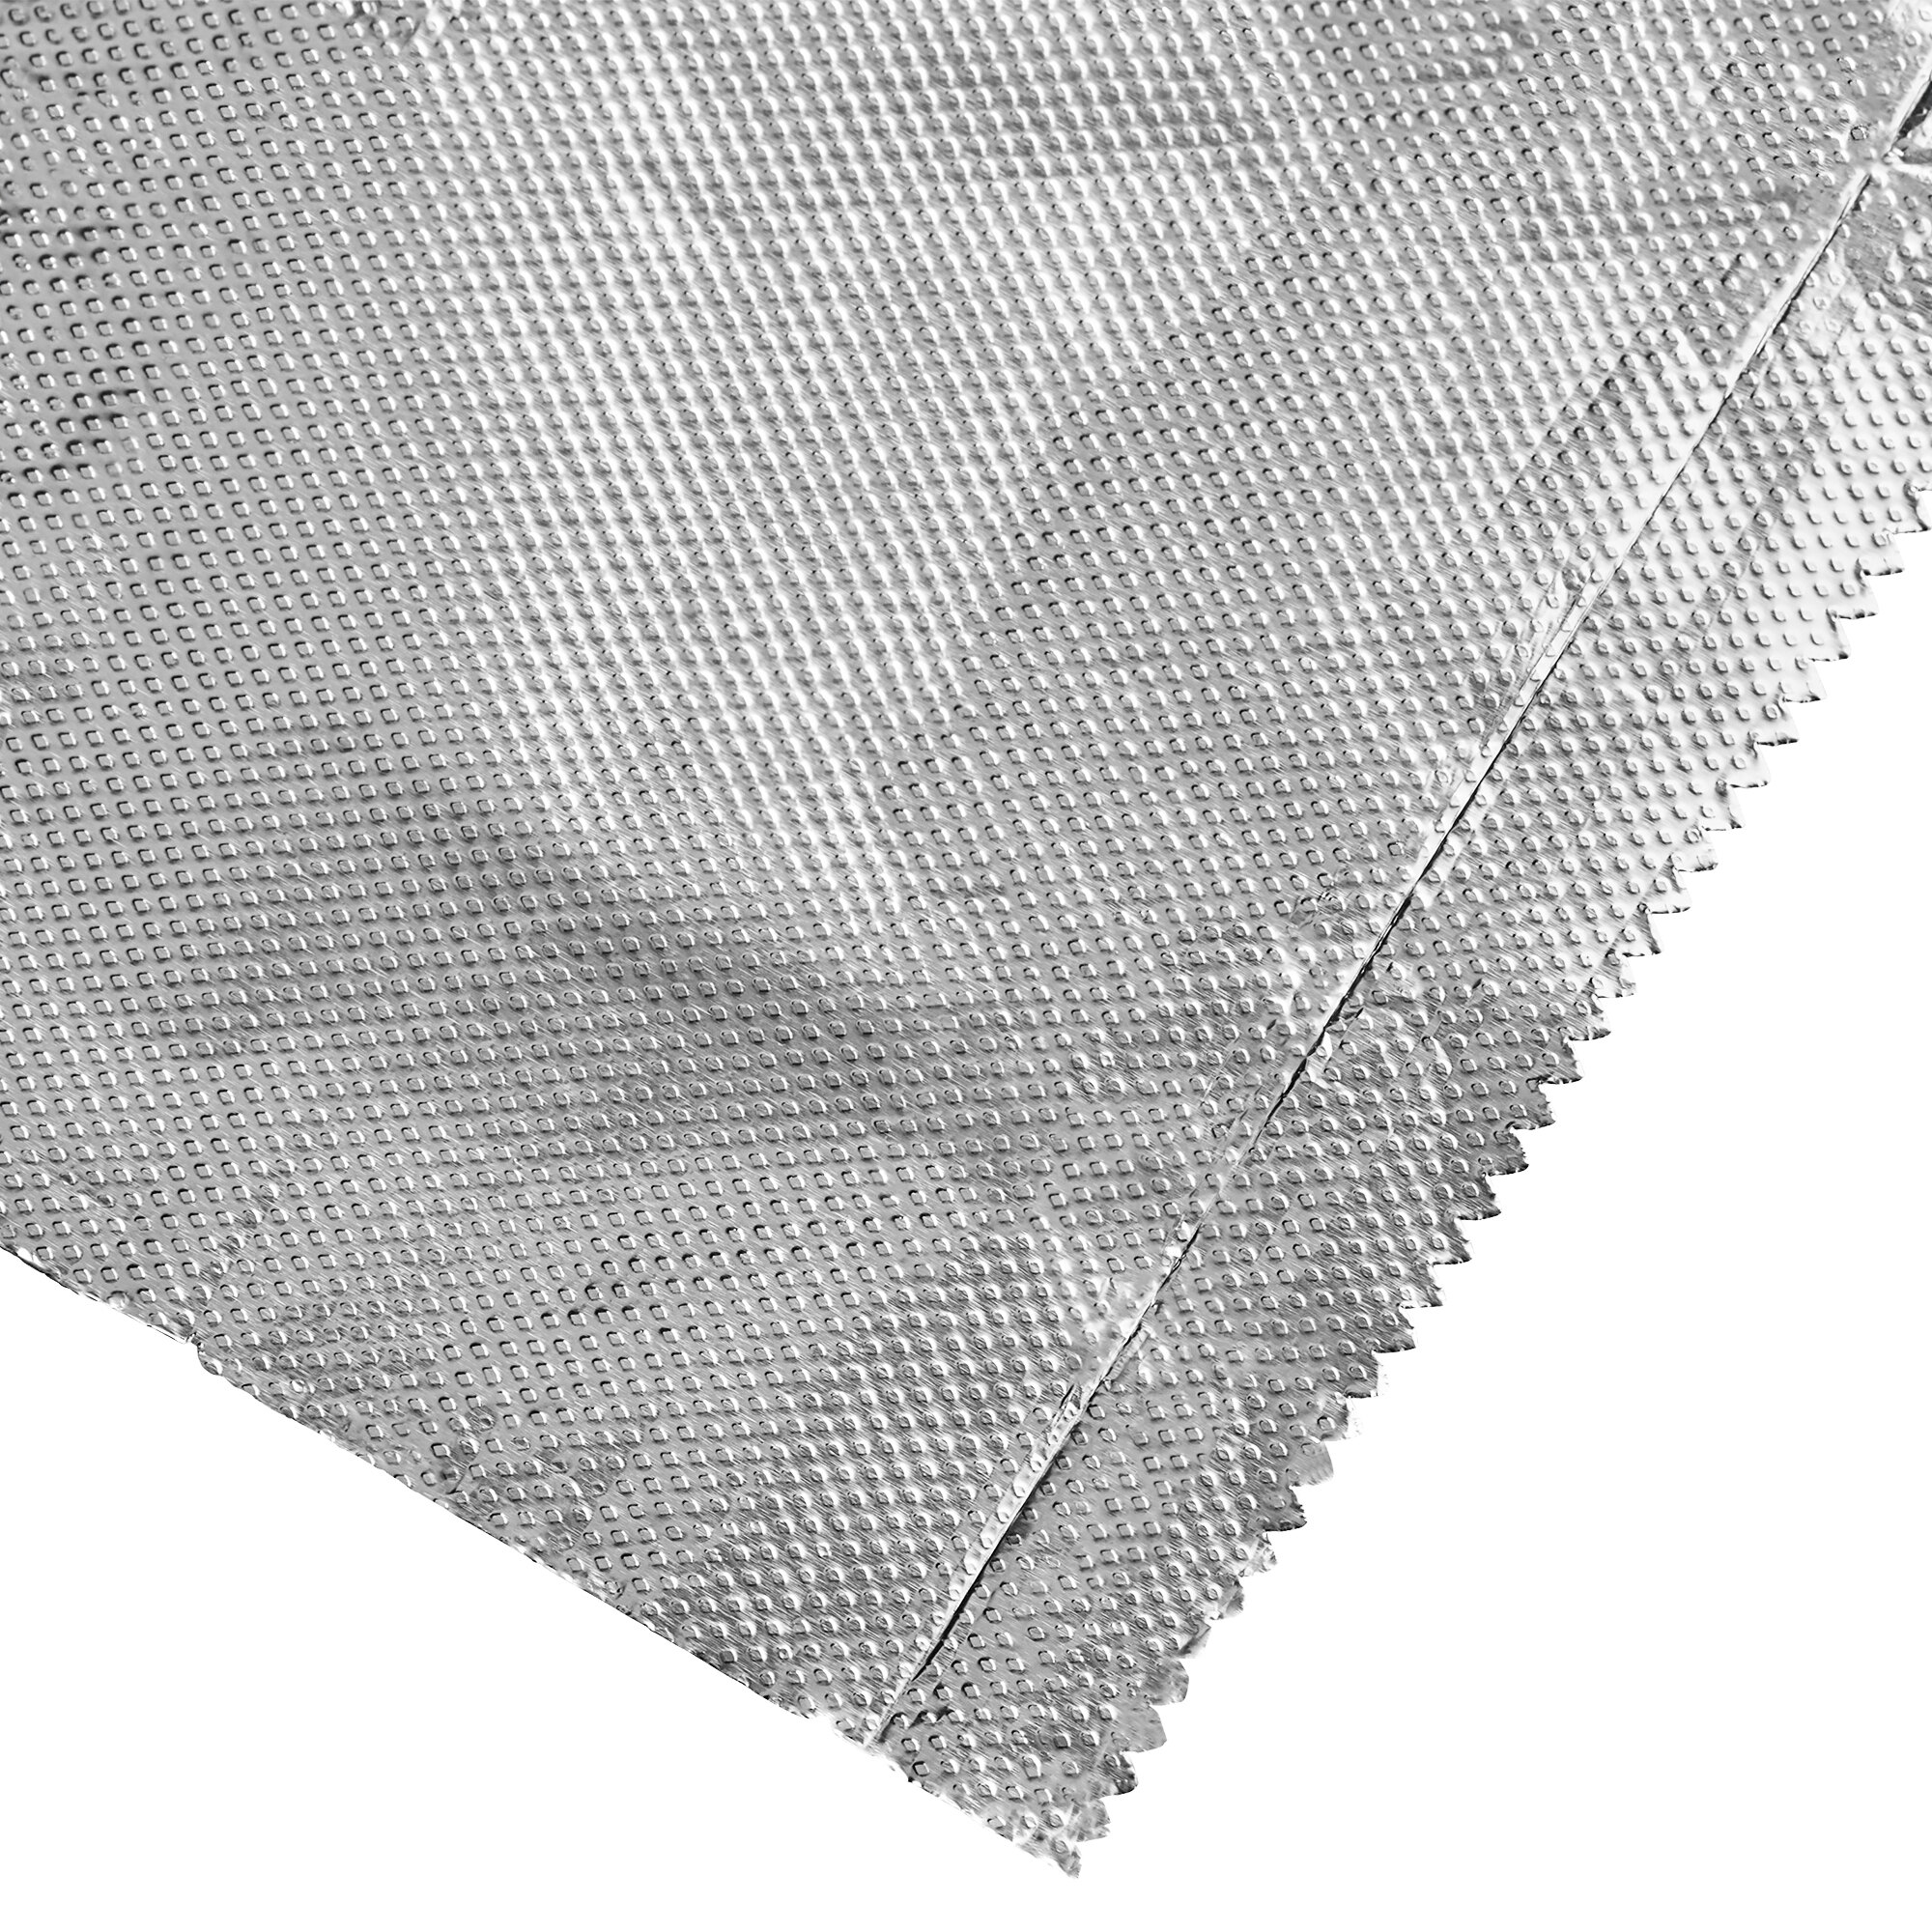 Aluminum Foil Pop Up Sheet – Prime Source Brands